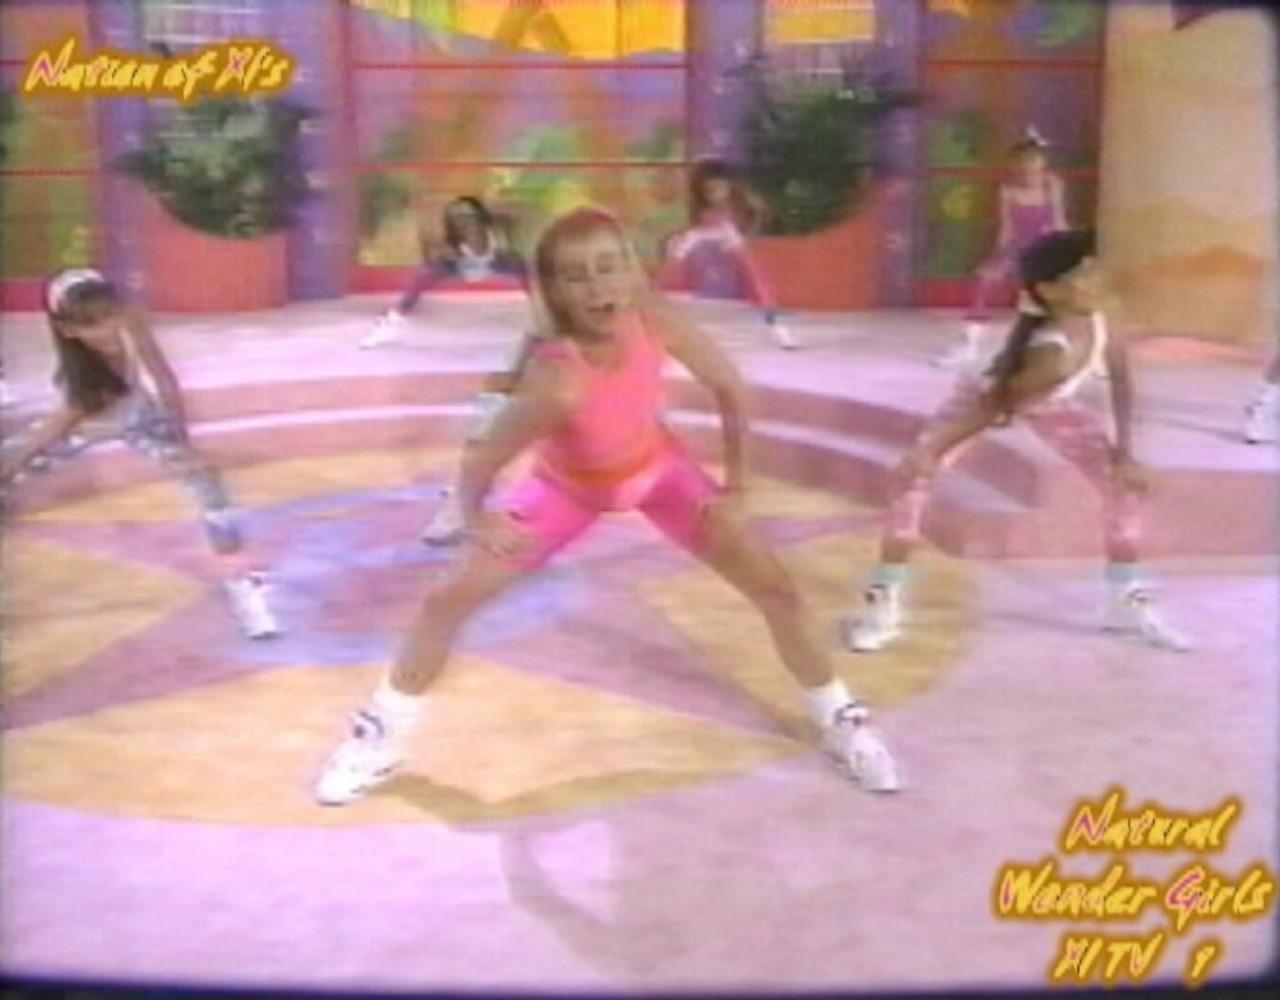 Natural Wonder Girls! Dance Workout! "Barbie Gets Nine Inch Nailed!" - Lisa Mariano! 